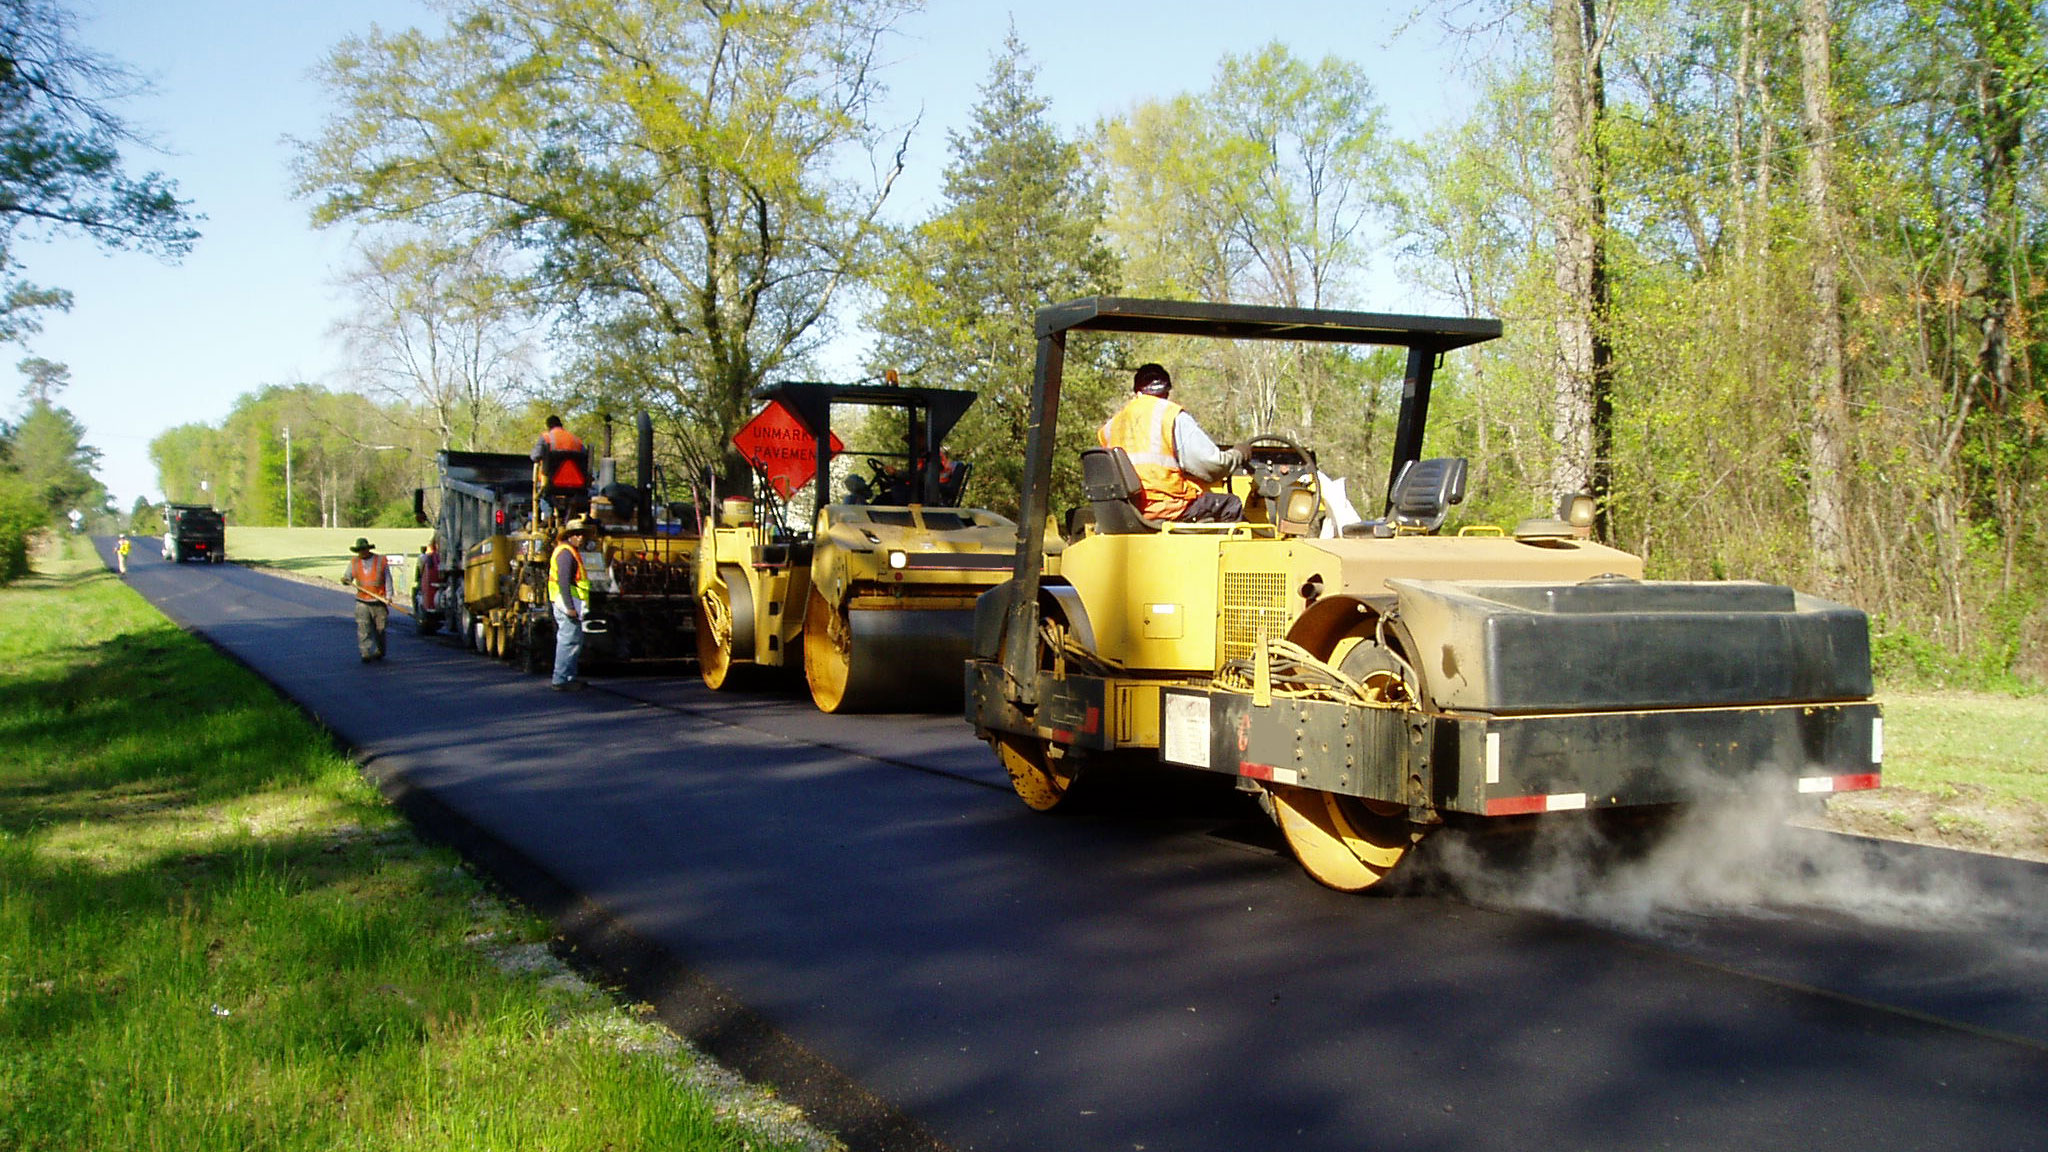 Image of multiple steam rollers packing a two-lane rural asphalt road.